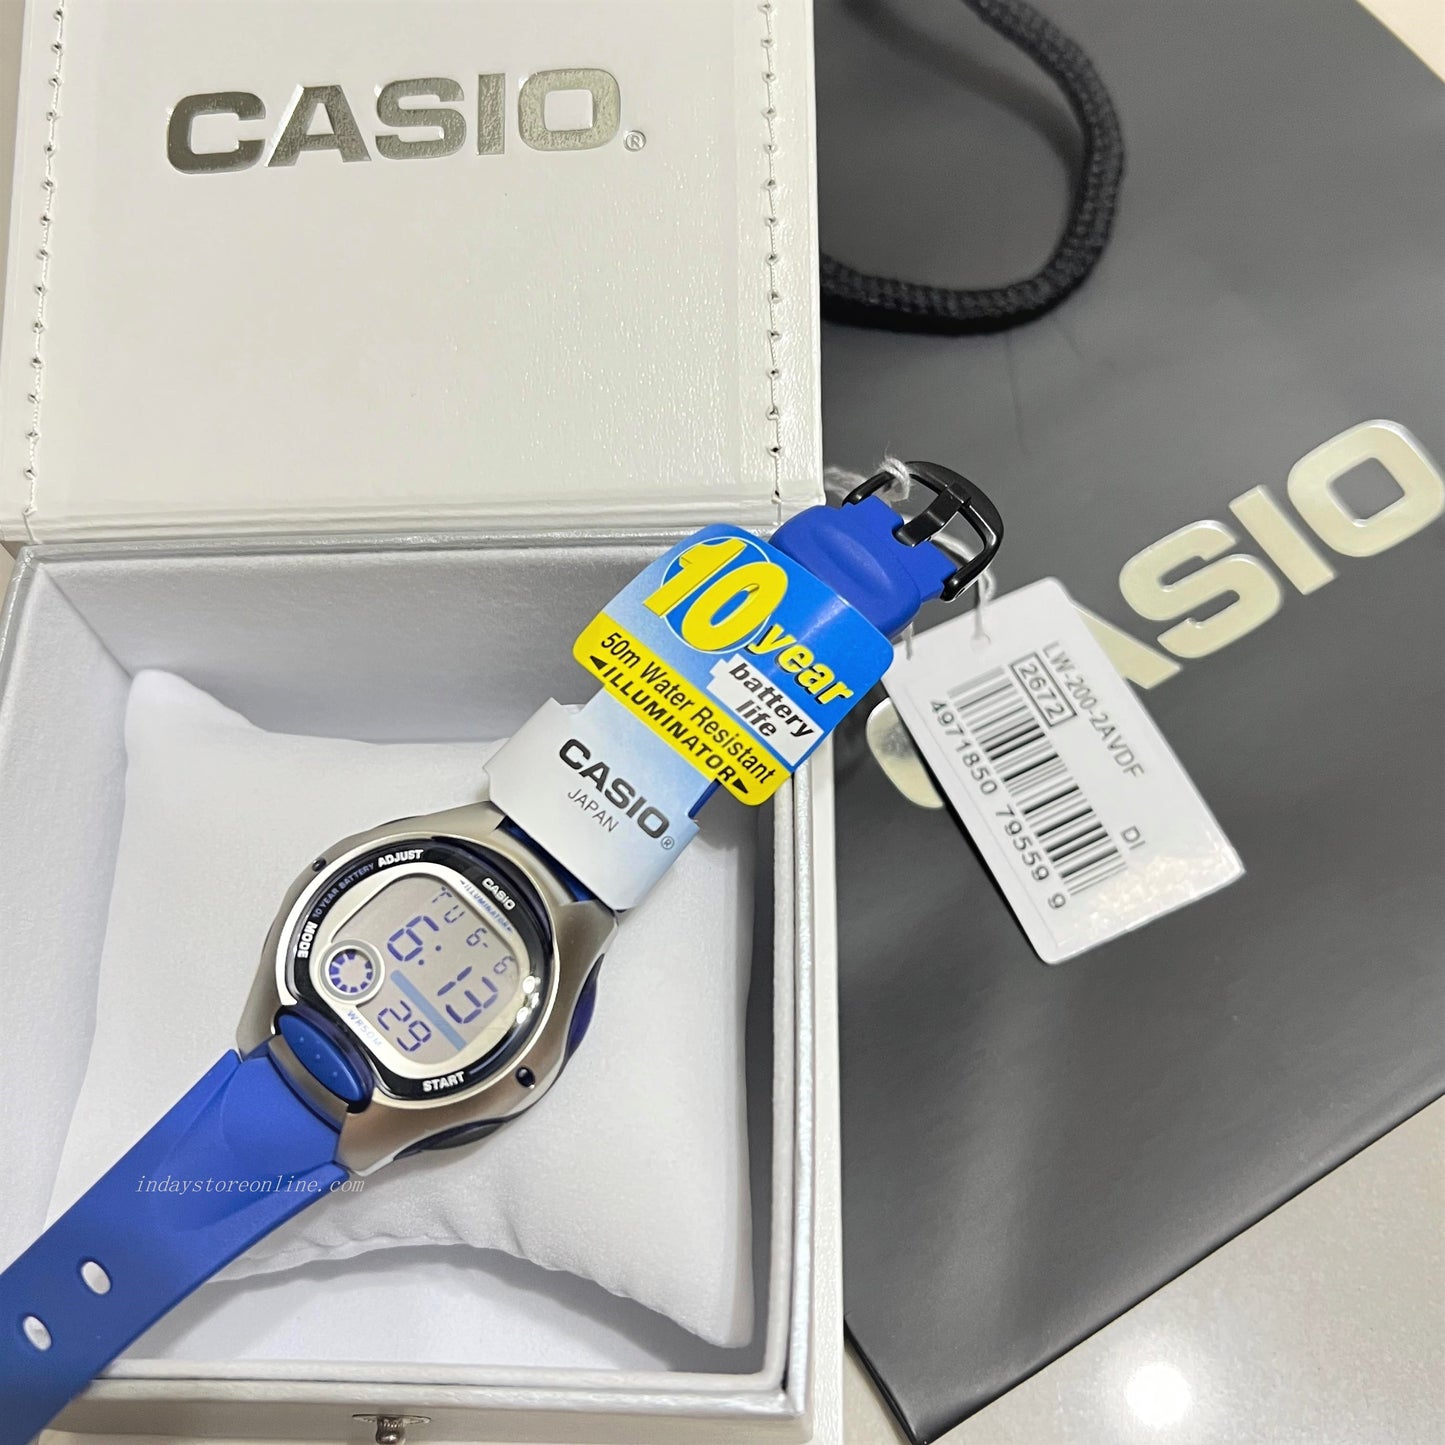 Casio Digital Women's Watch LW-200-2A Digital Blue Resin Band Resin Glass Battery Life: 10 Years